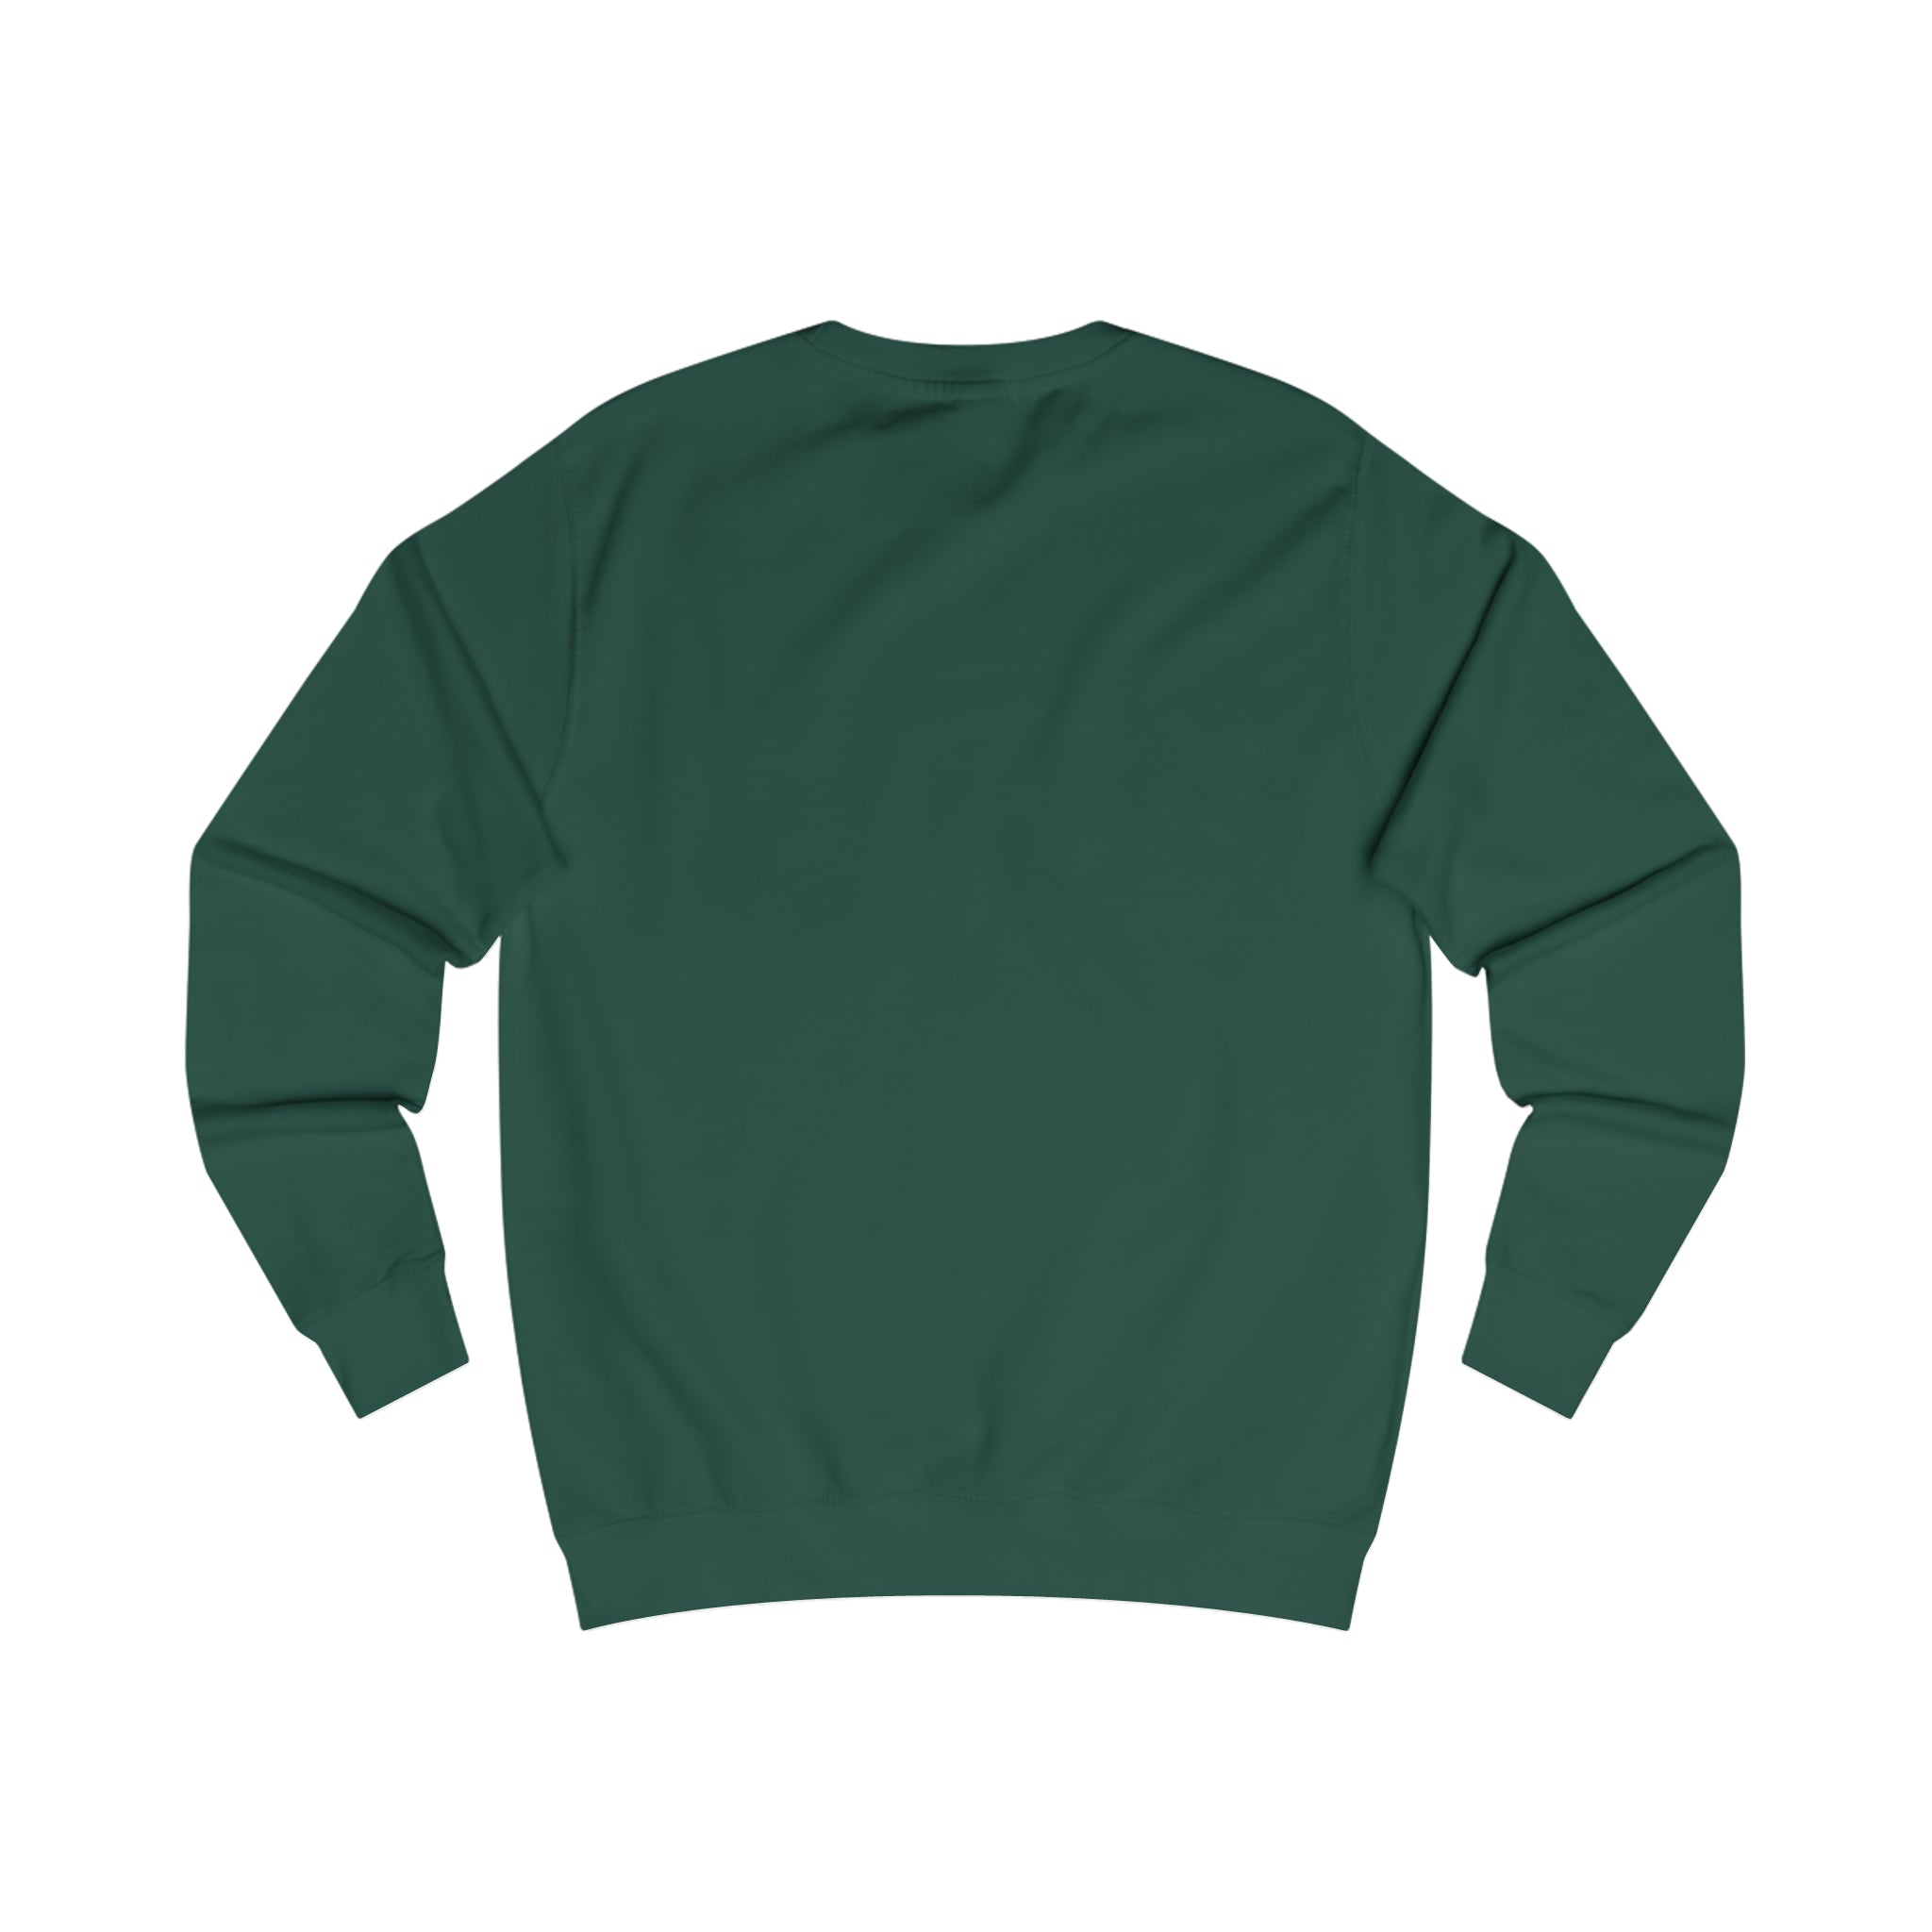 Justabarth Official Sweatshirt